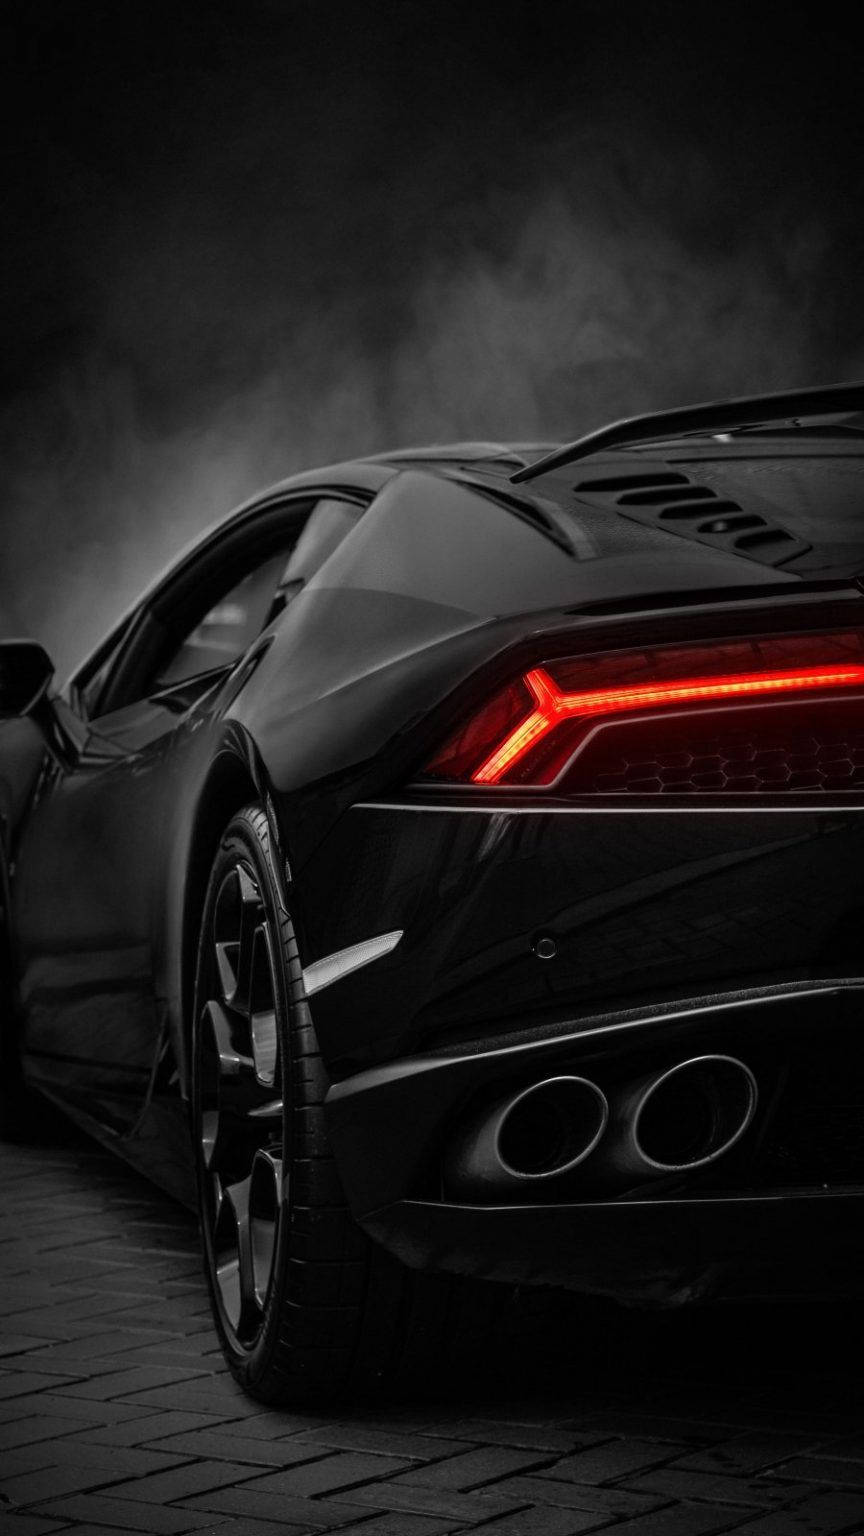  Lamborghini Aventador Hintergrundbild 864x1536. Download Black Lamborghini Aventador iPhone Car Wallpaper